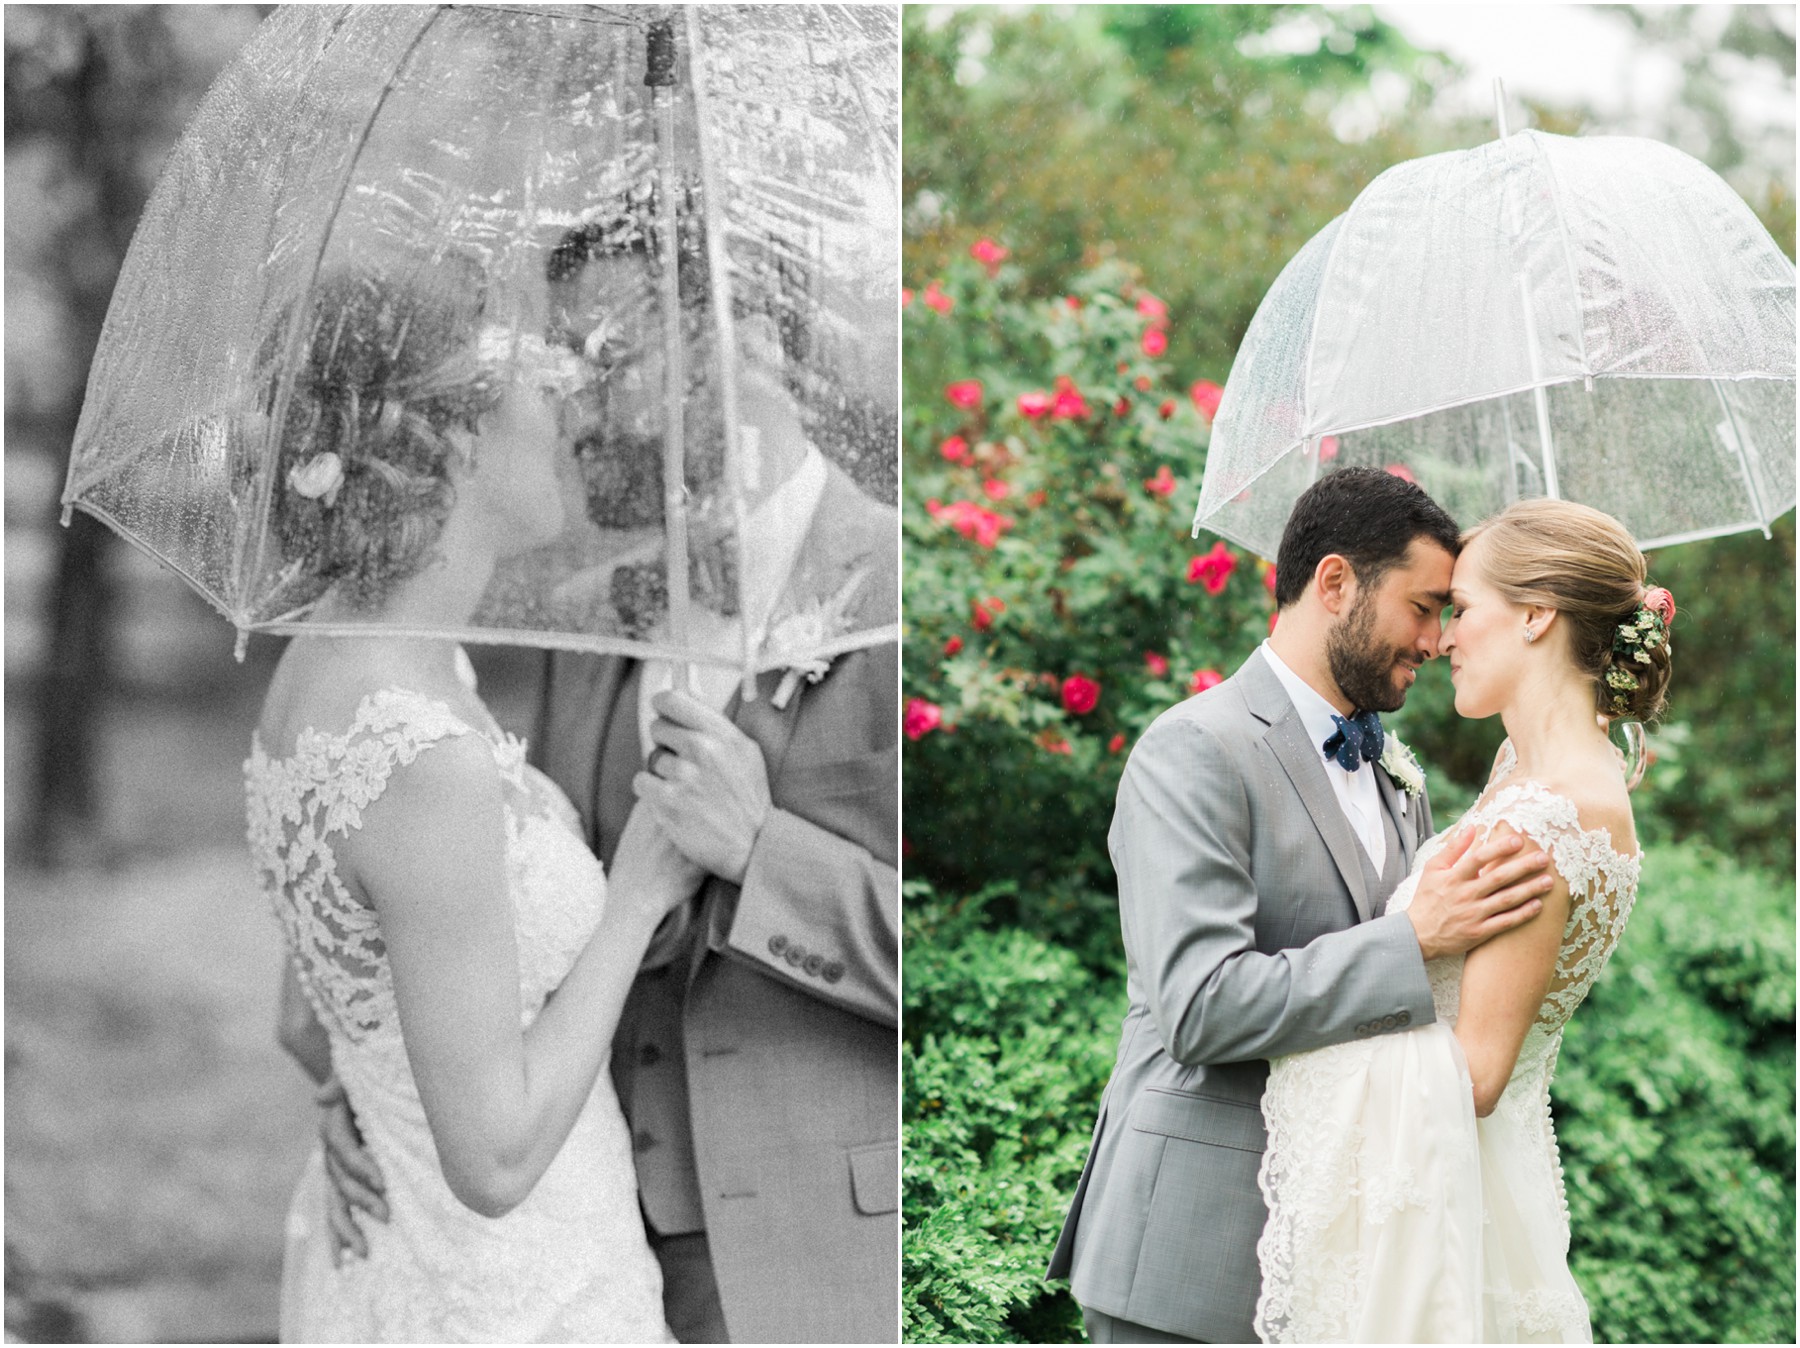 rainy wedding day photography tips